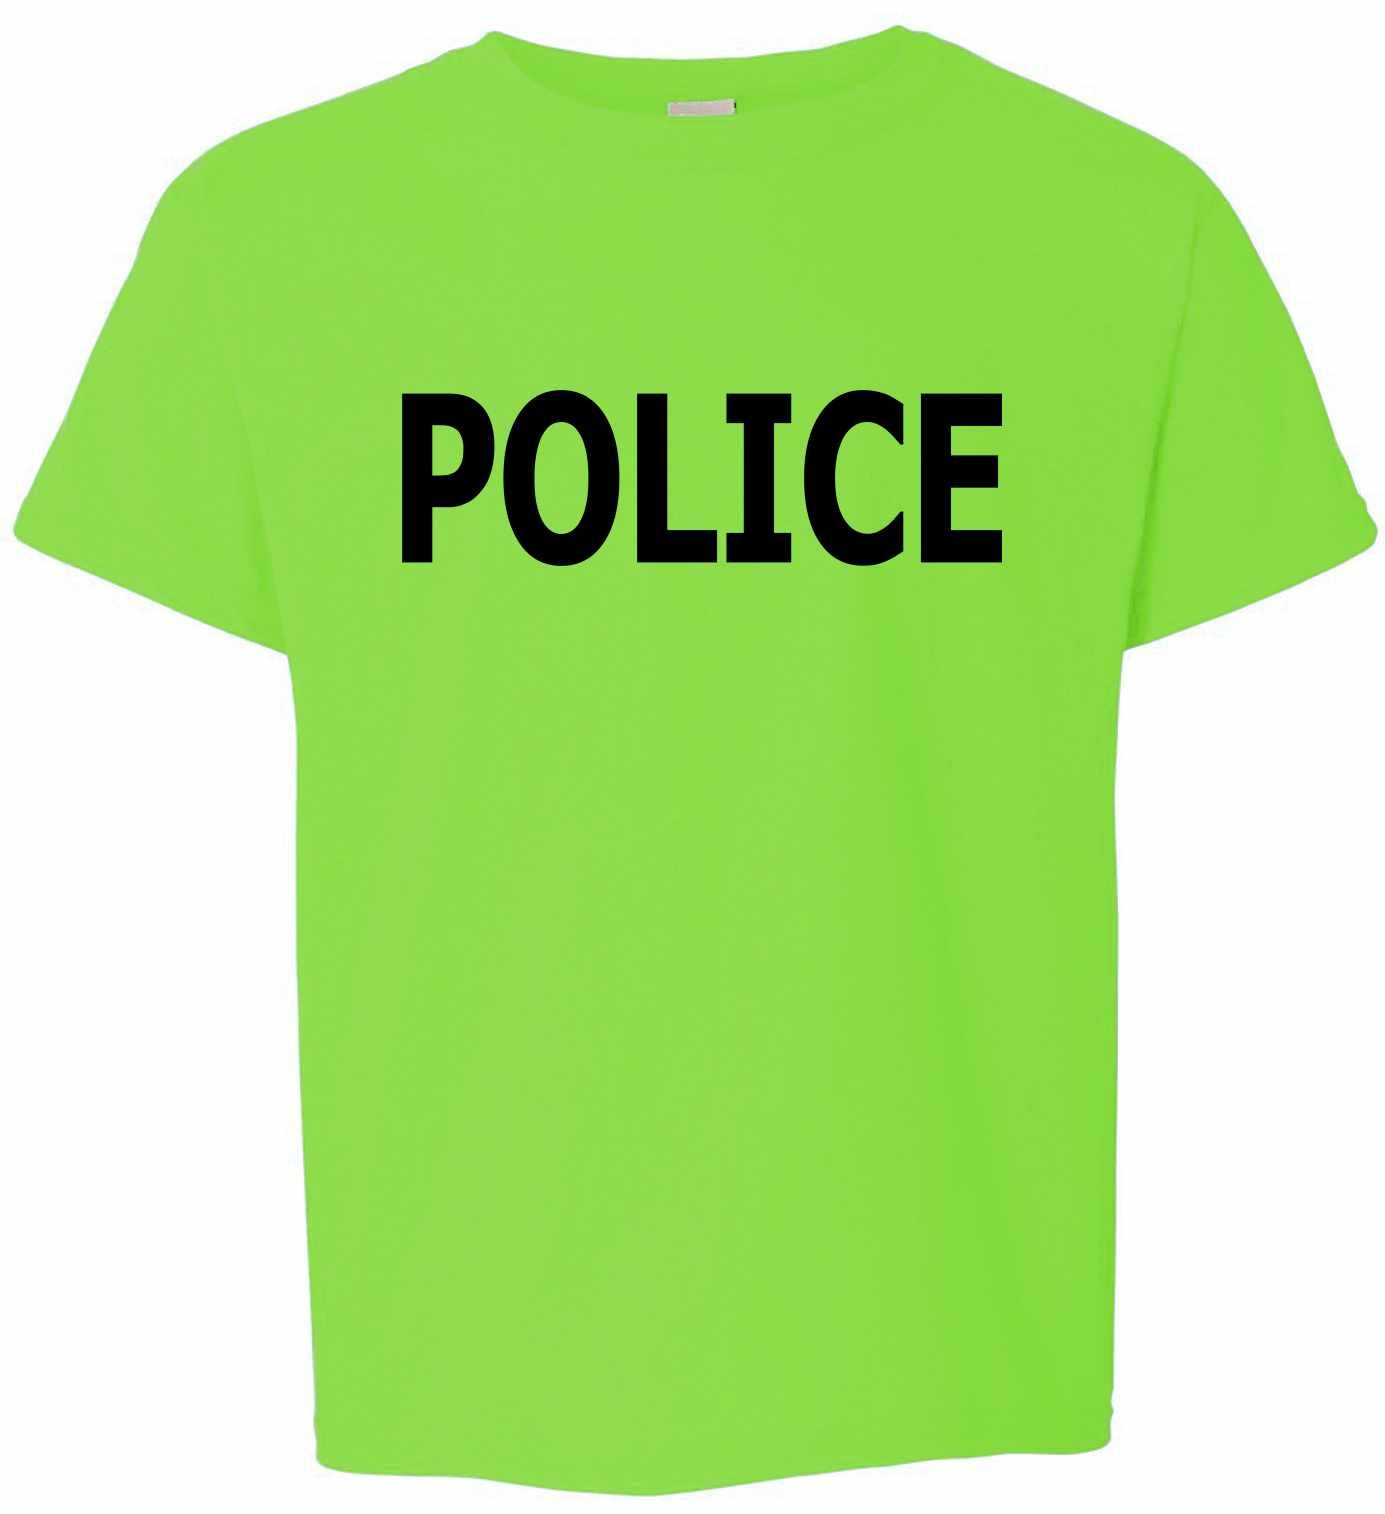 POLICE on Kids T-Shirt (#17-201)